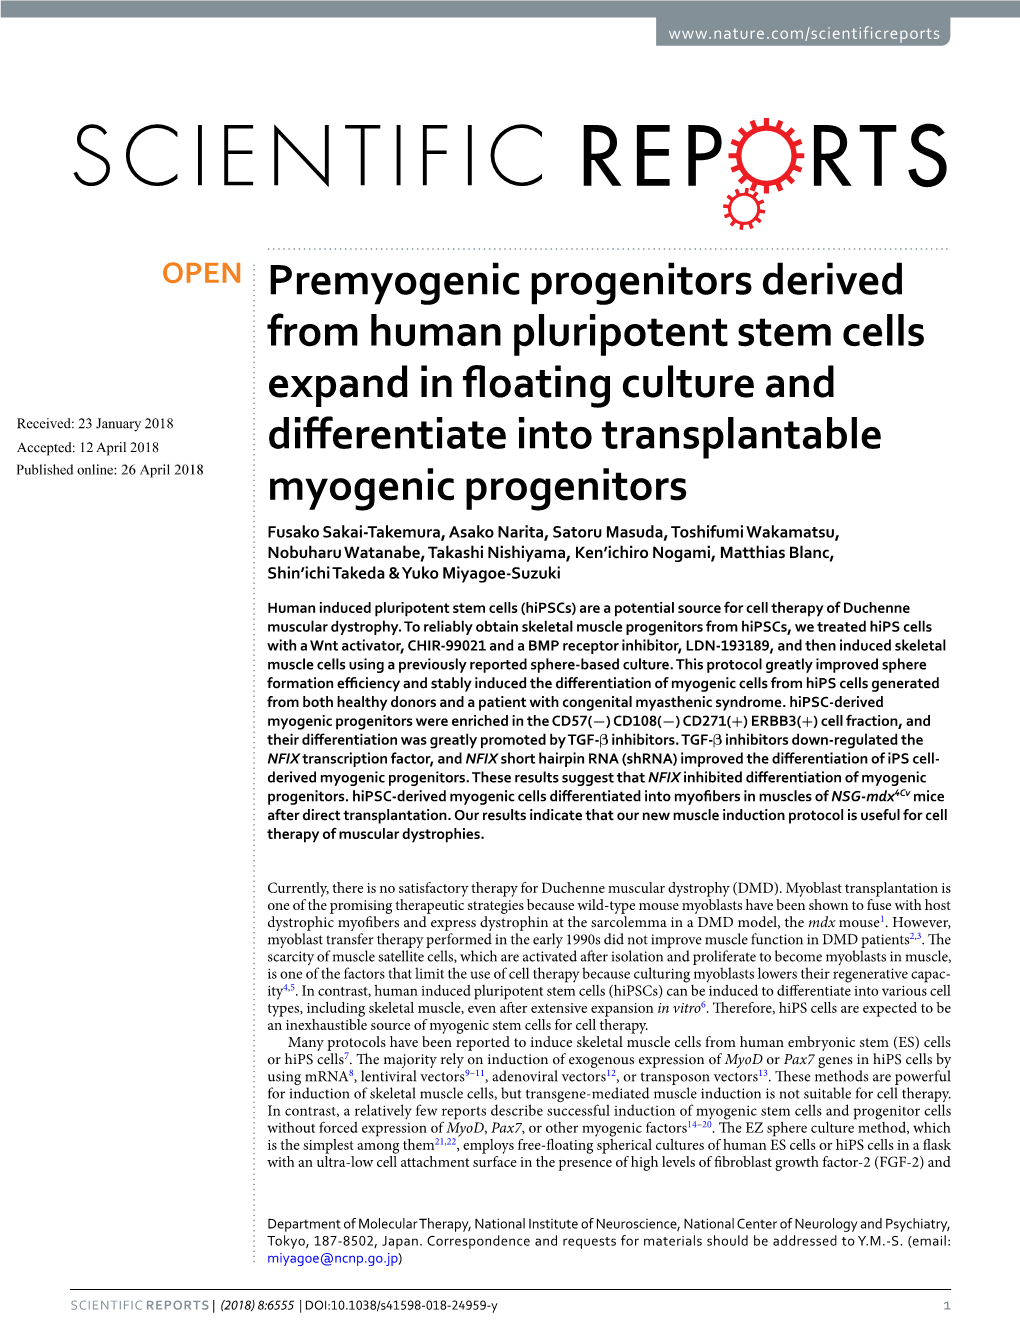 Premyogenic Progenitors Derived from Human Pluripotent Stem Cells